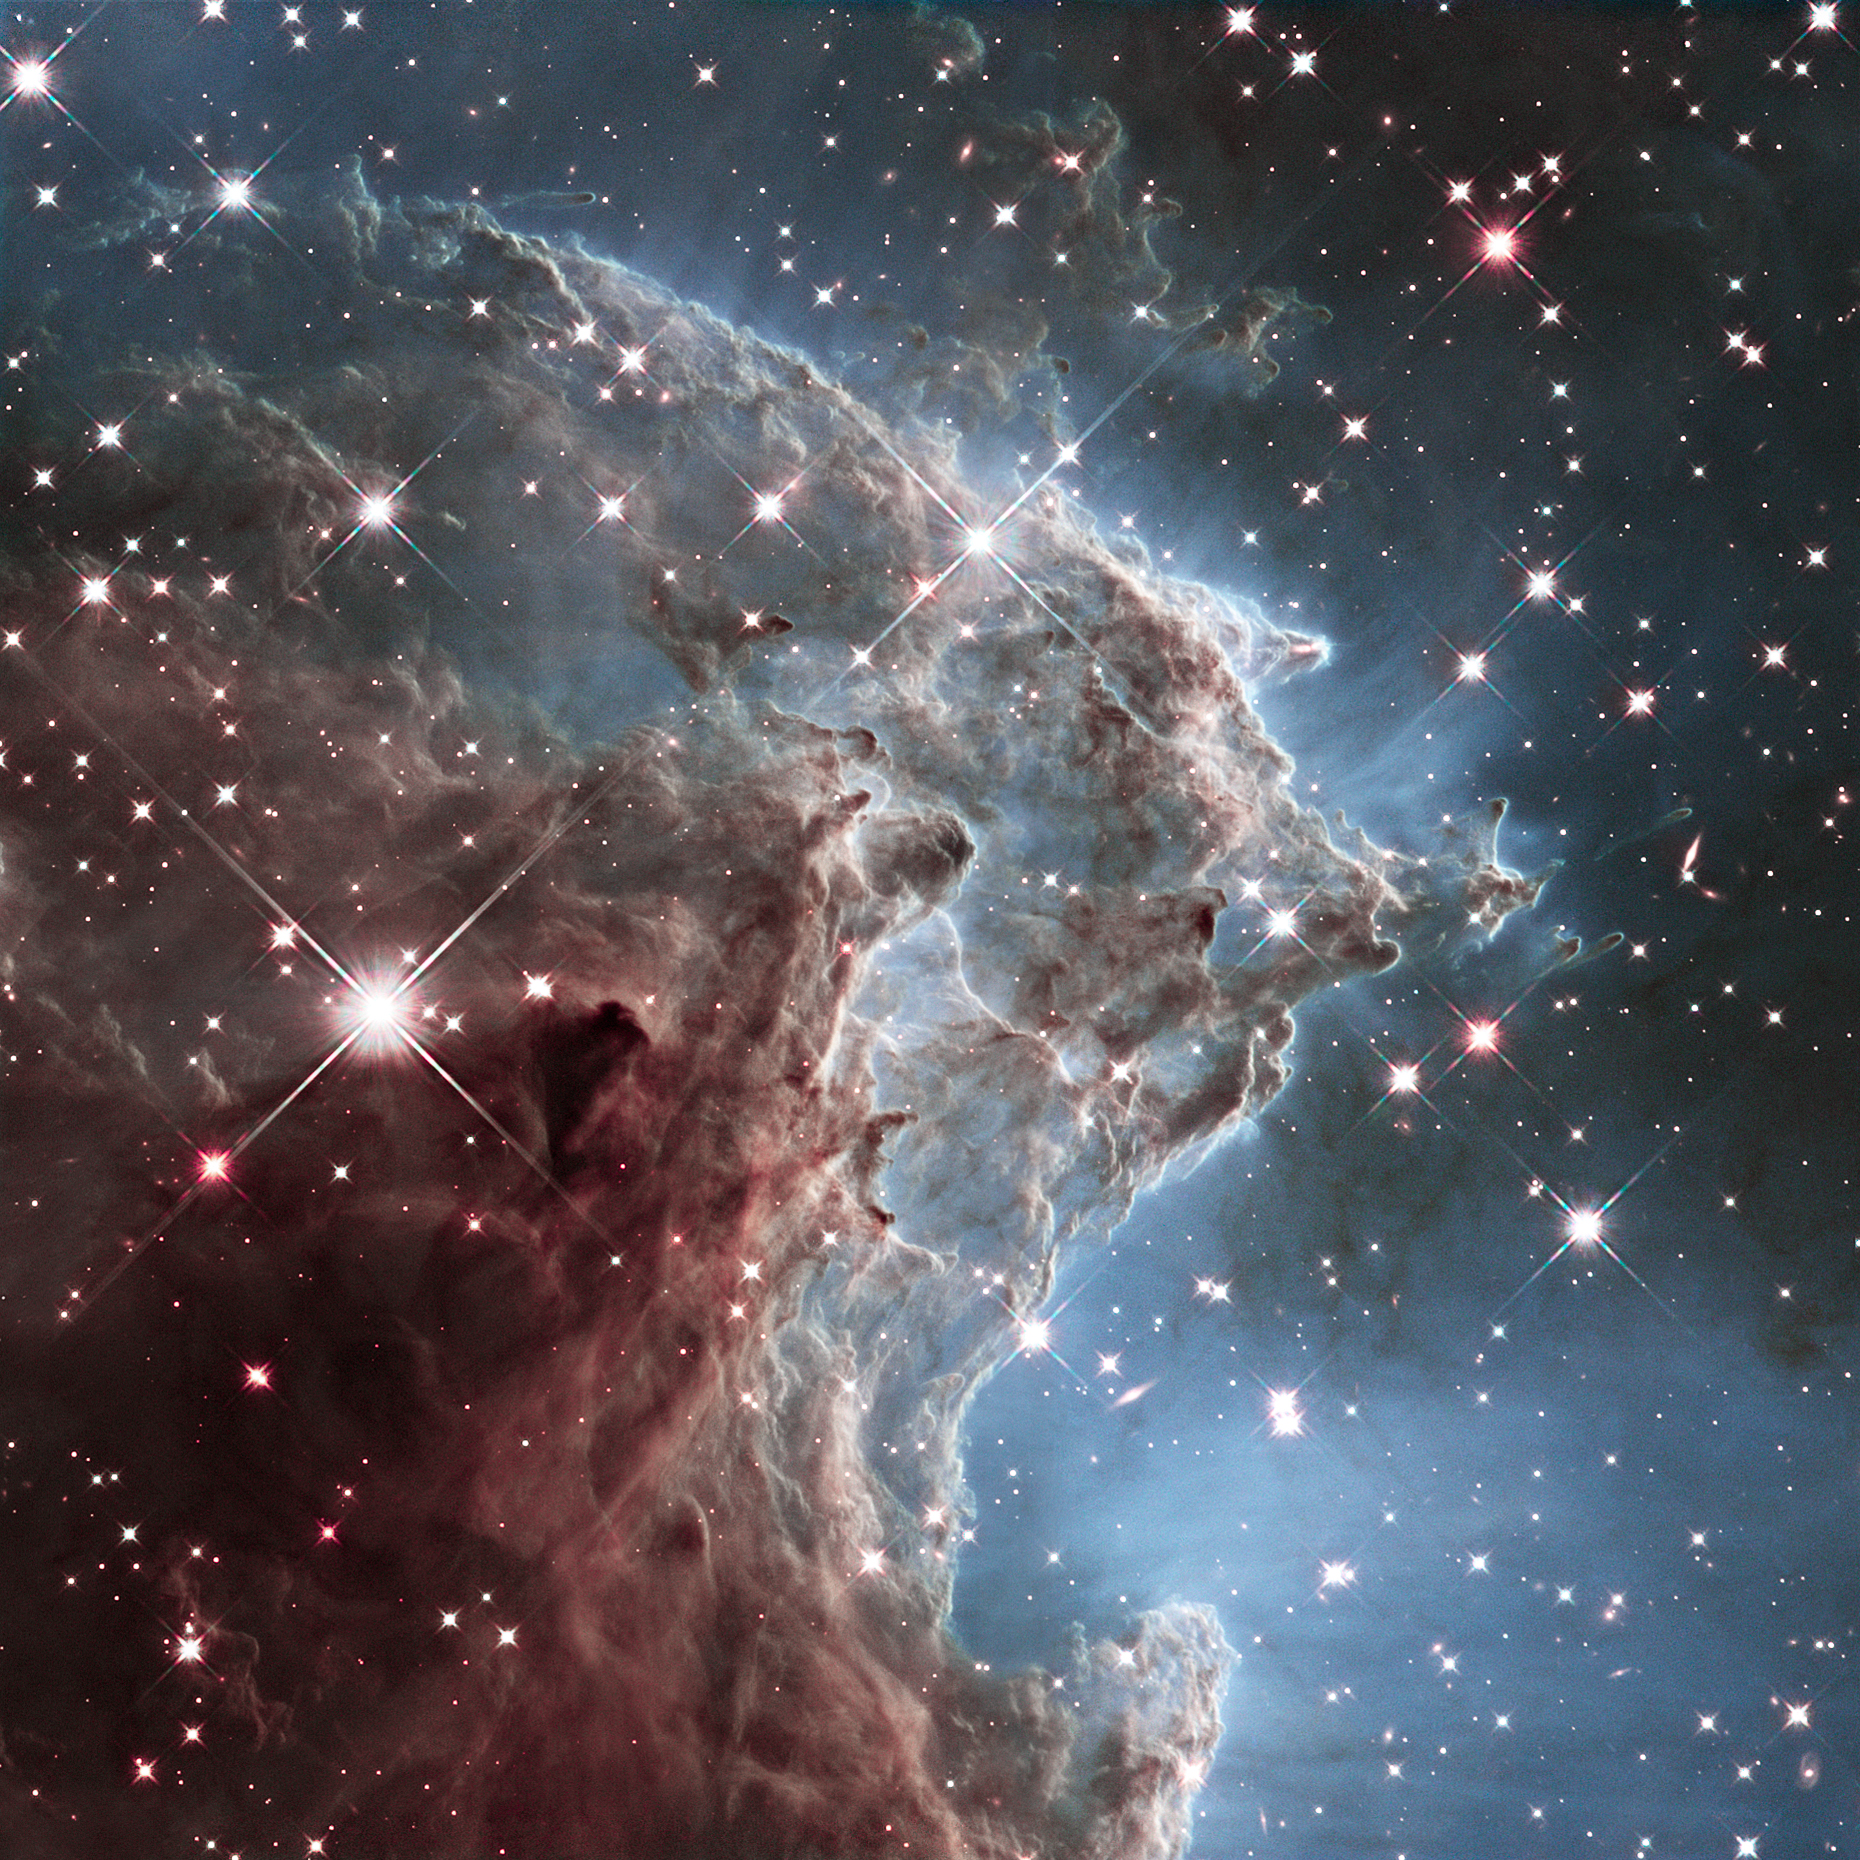 starbirth located 6,400 light-years away